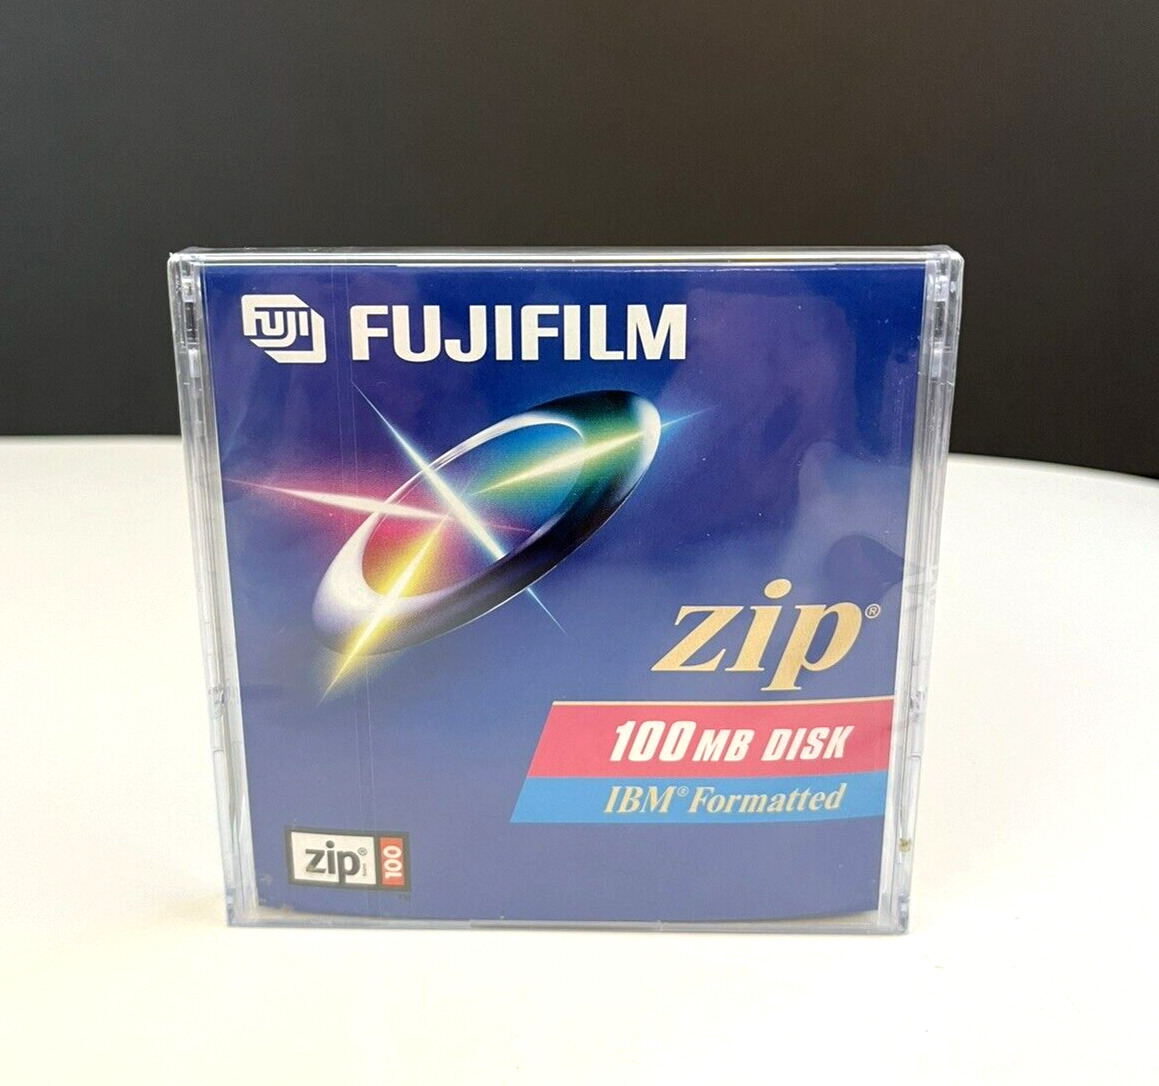 Fujifilm - Zip - 100MB Disk - IBM Formatted ~New/Sealed